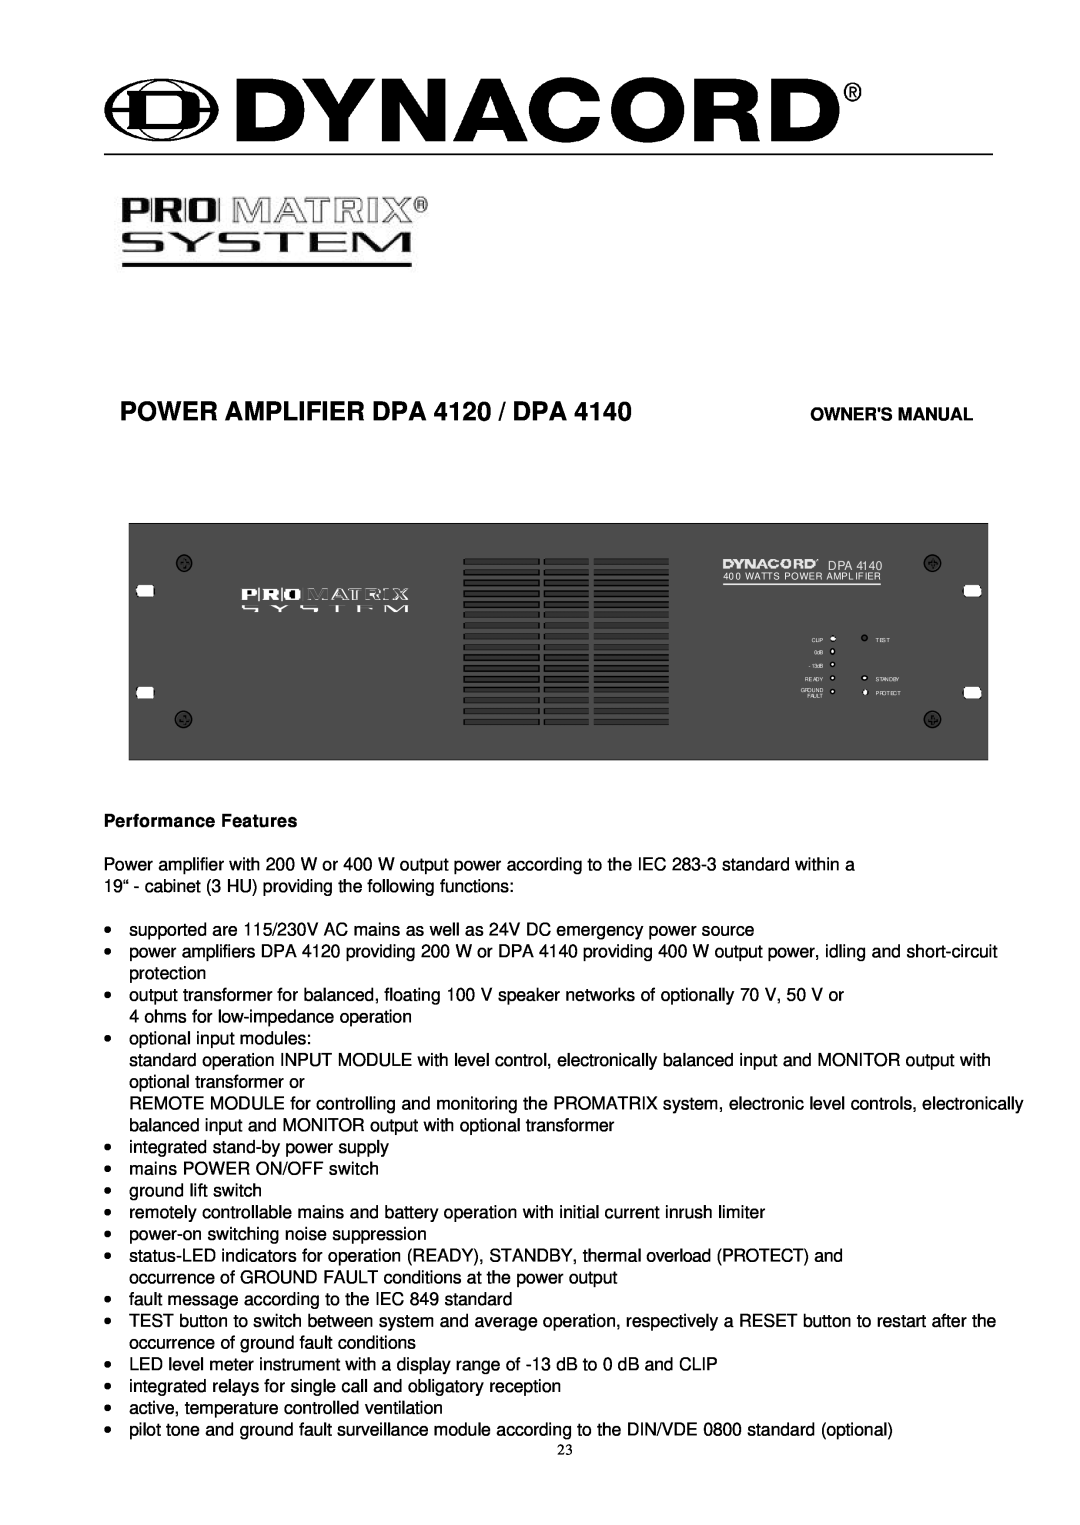 Dynacord DPA 4140 owner manual POWER AMPLIFIER DPA 4120 / DPA, Leistungsmerkmale 